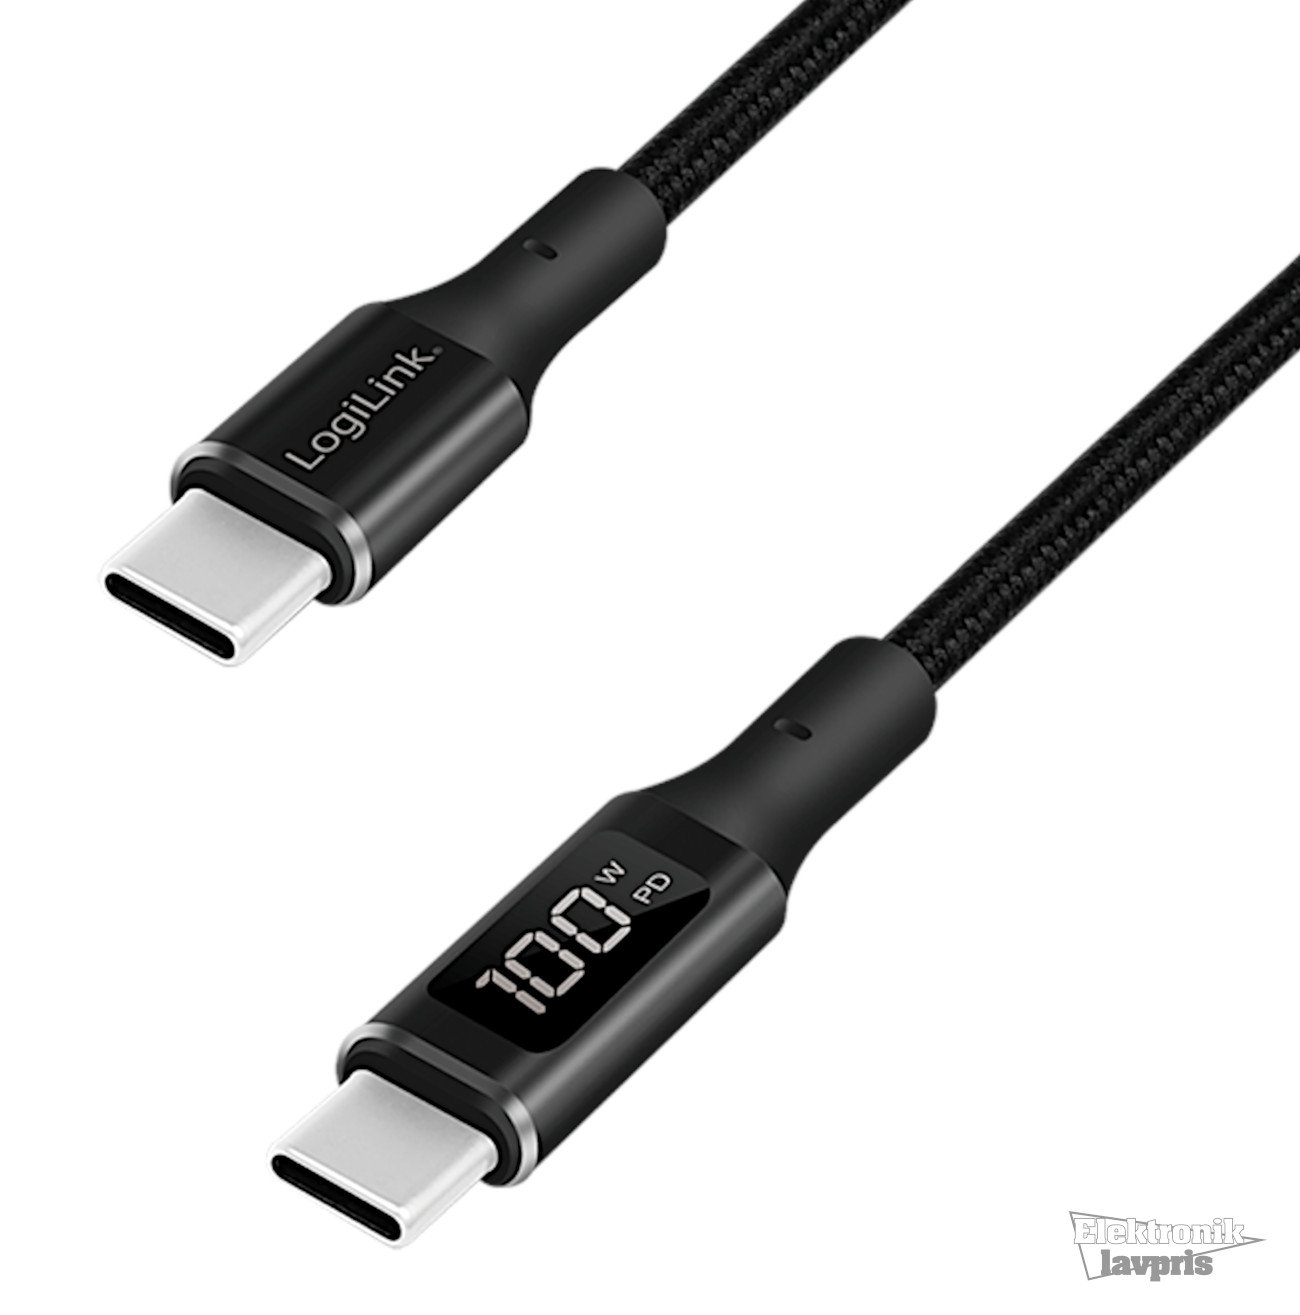 Mark Resignation maksimum USB-C kabel med display, 3.0, hurtig opladning | Elektronik Lavpris Aps